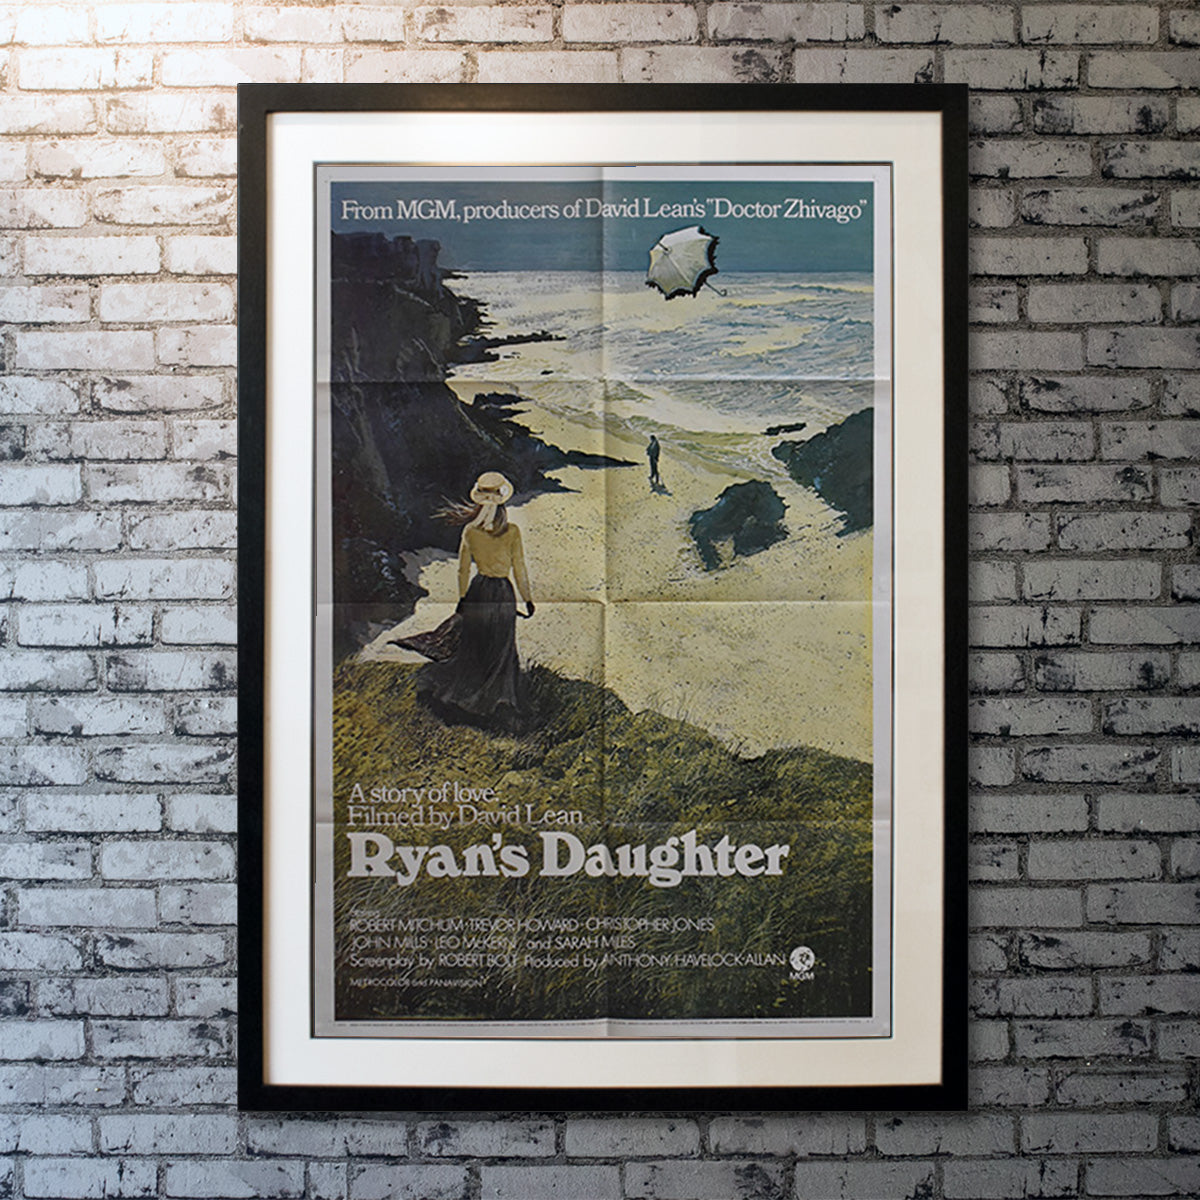 Original Movie Poster of Ryan's Daughter (1970)